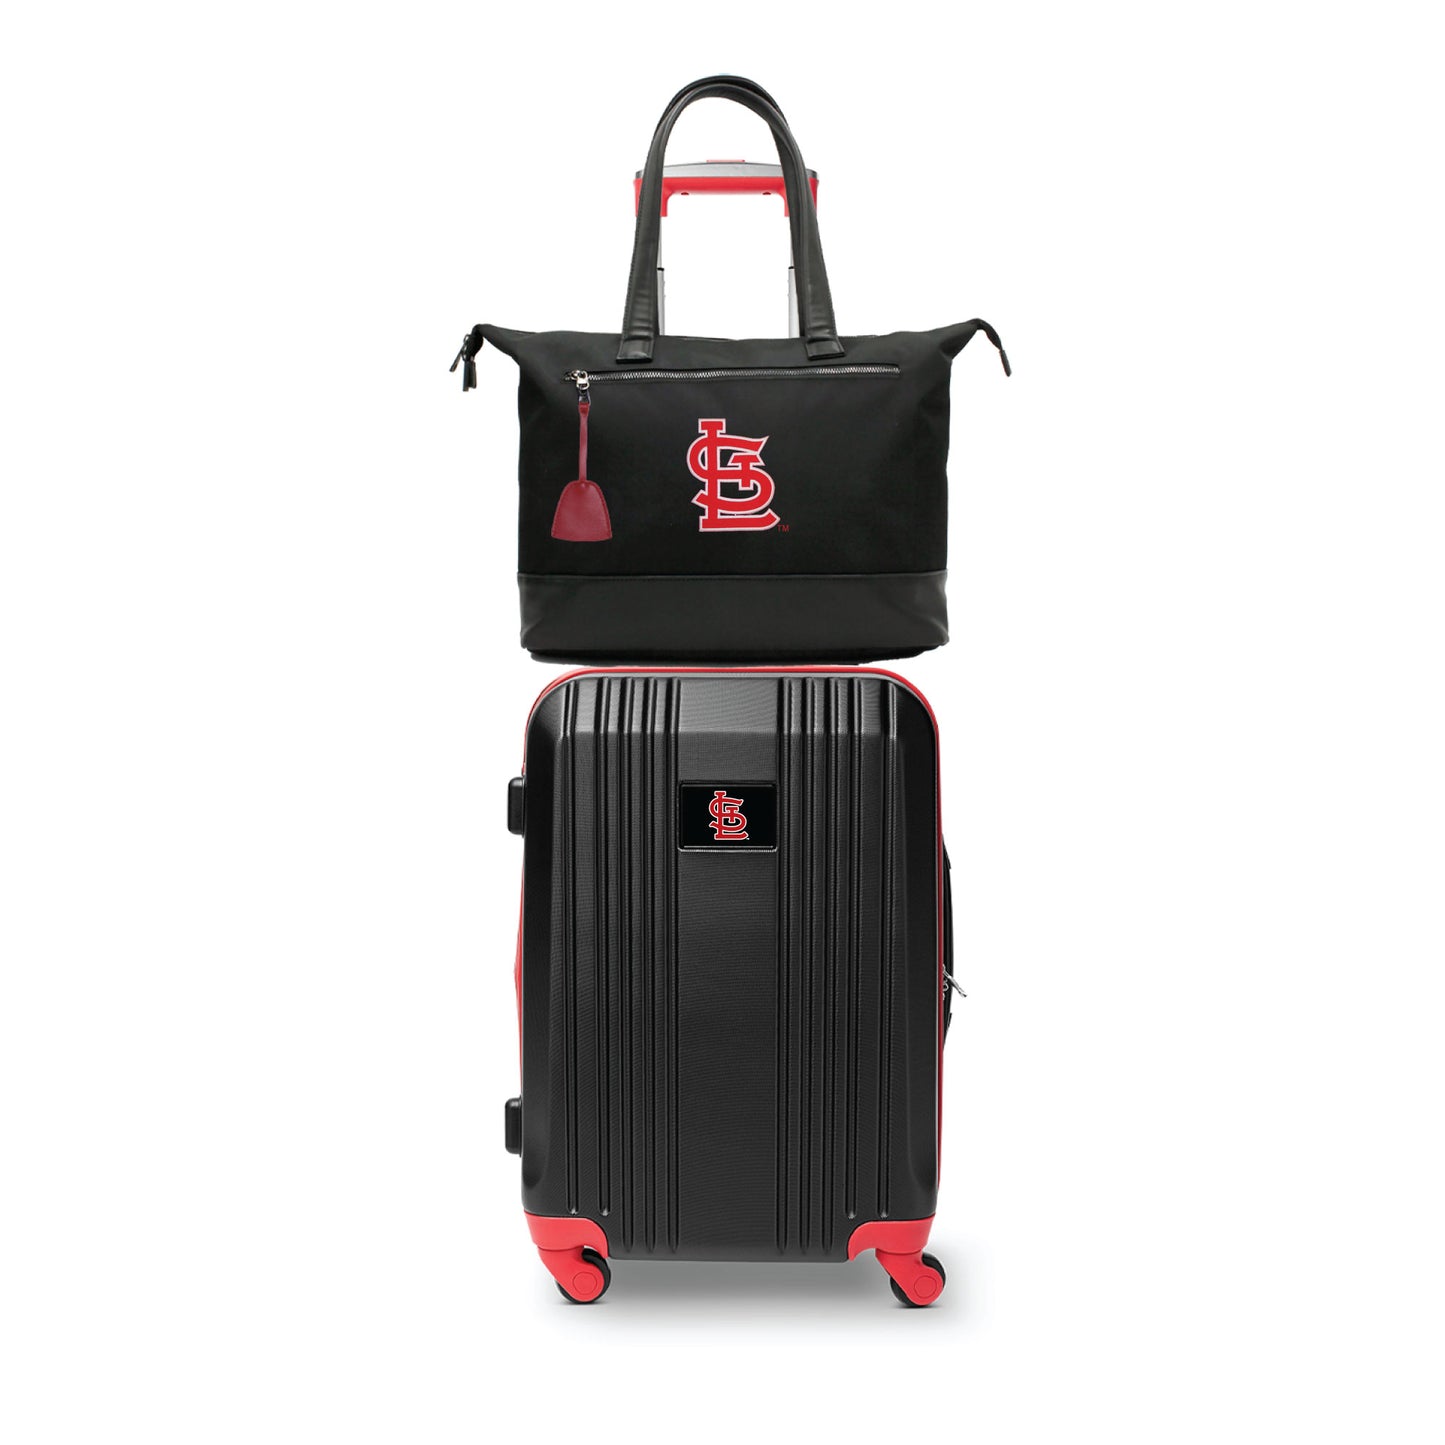 St Louis Cardinals Premium Laptop Tote Bag and Luggage Set